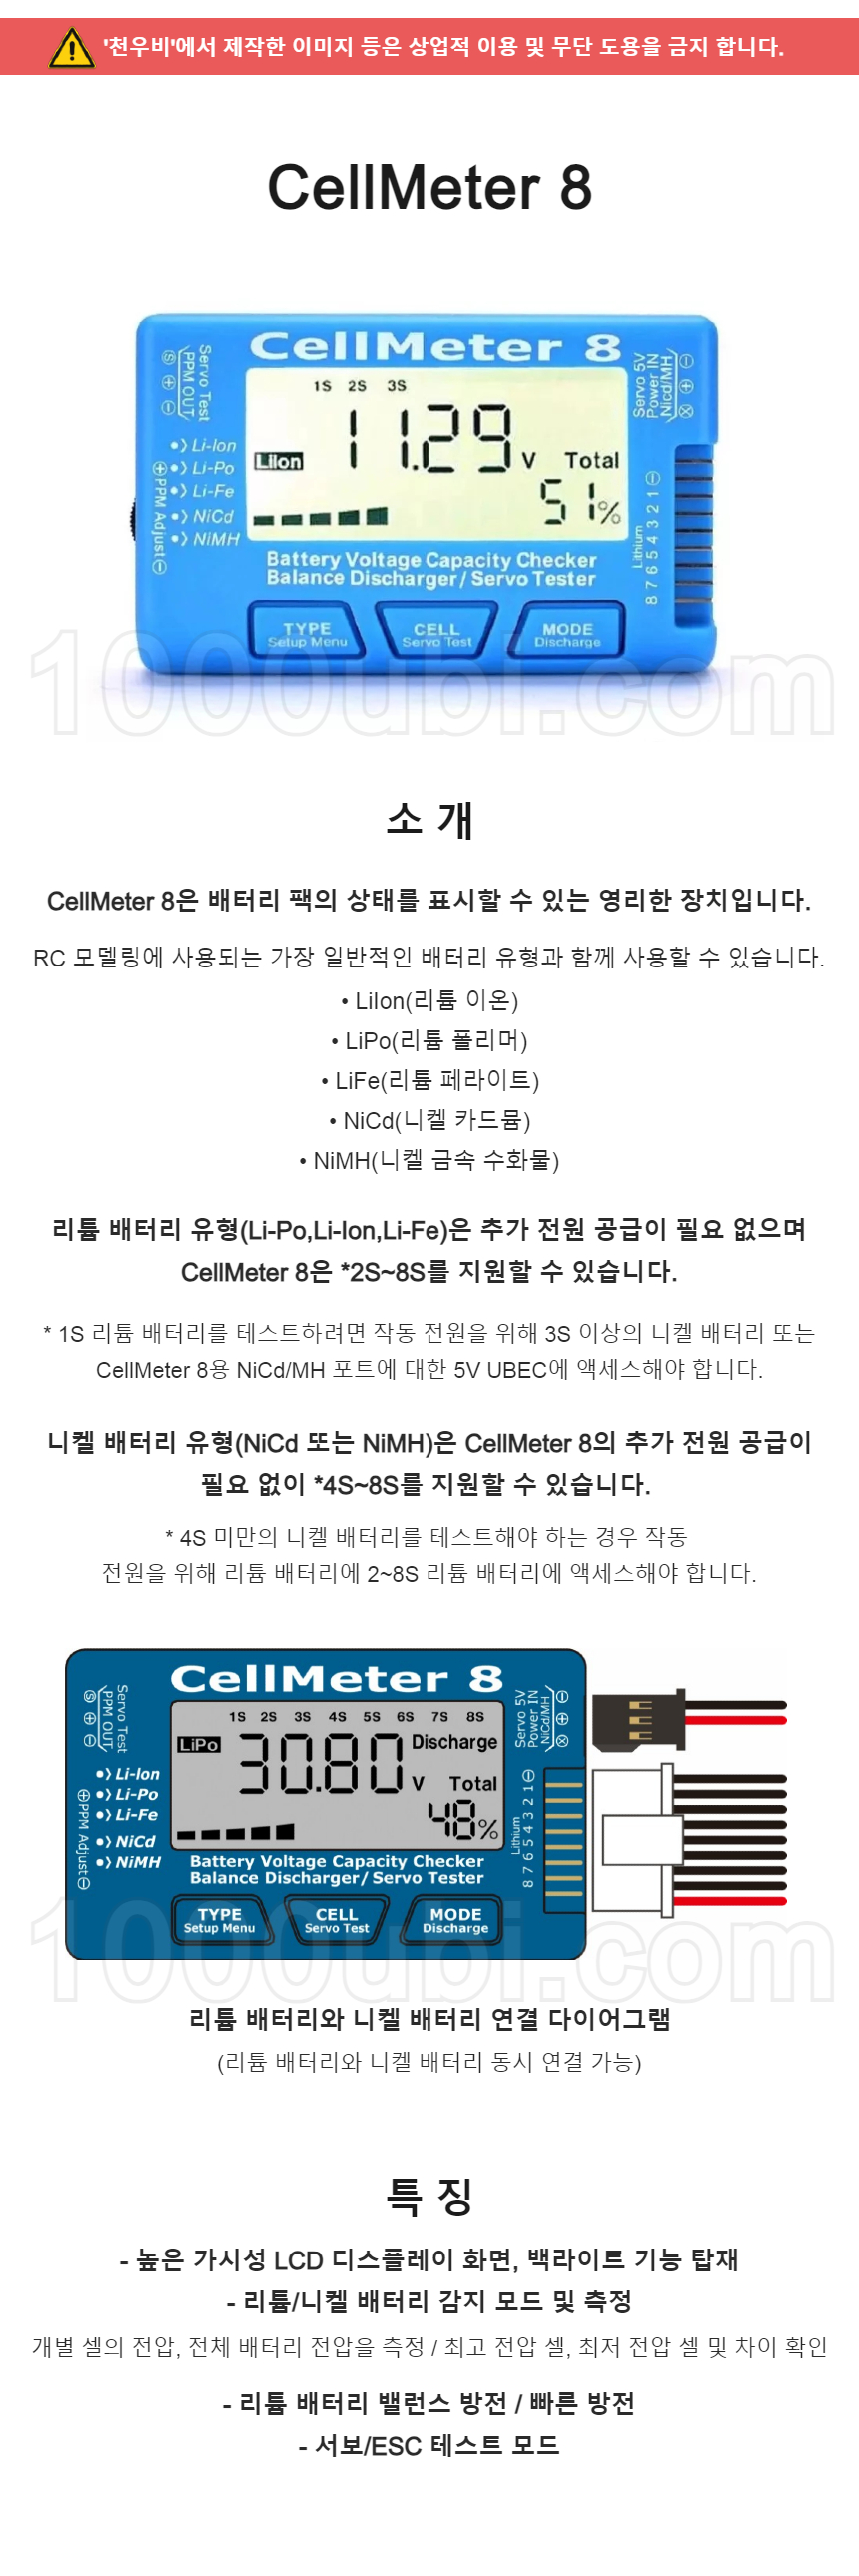 CellMeter8_de_ubi_860_100420.jpg